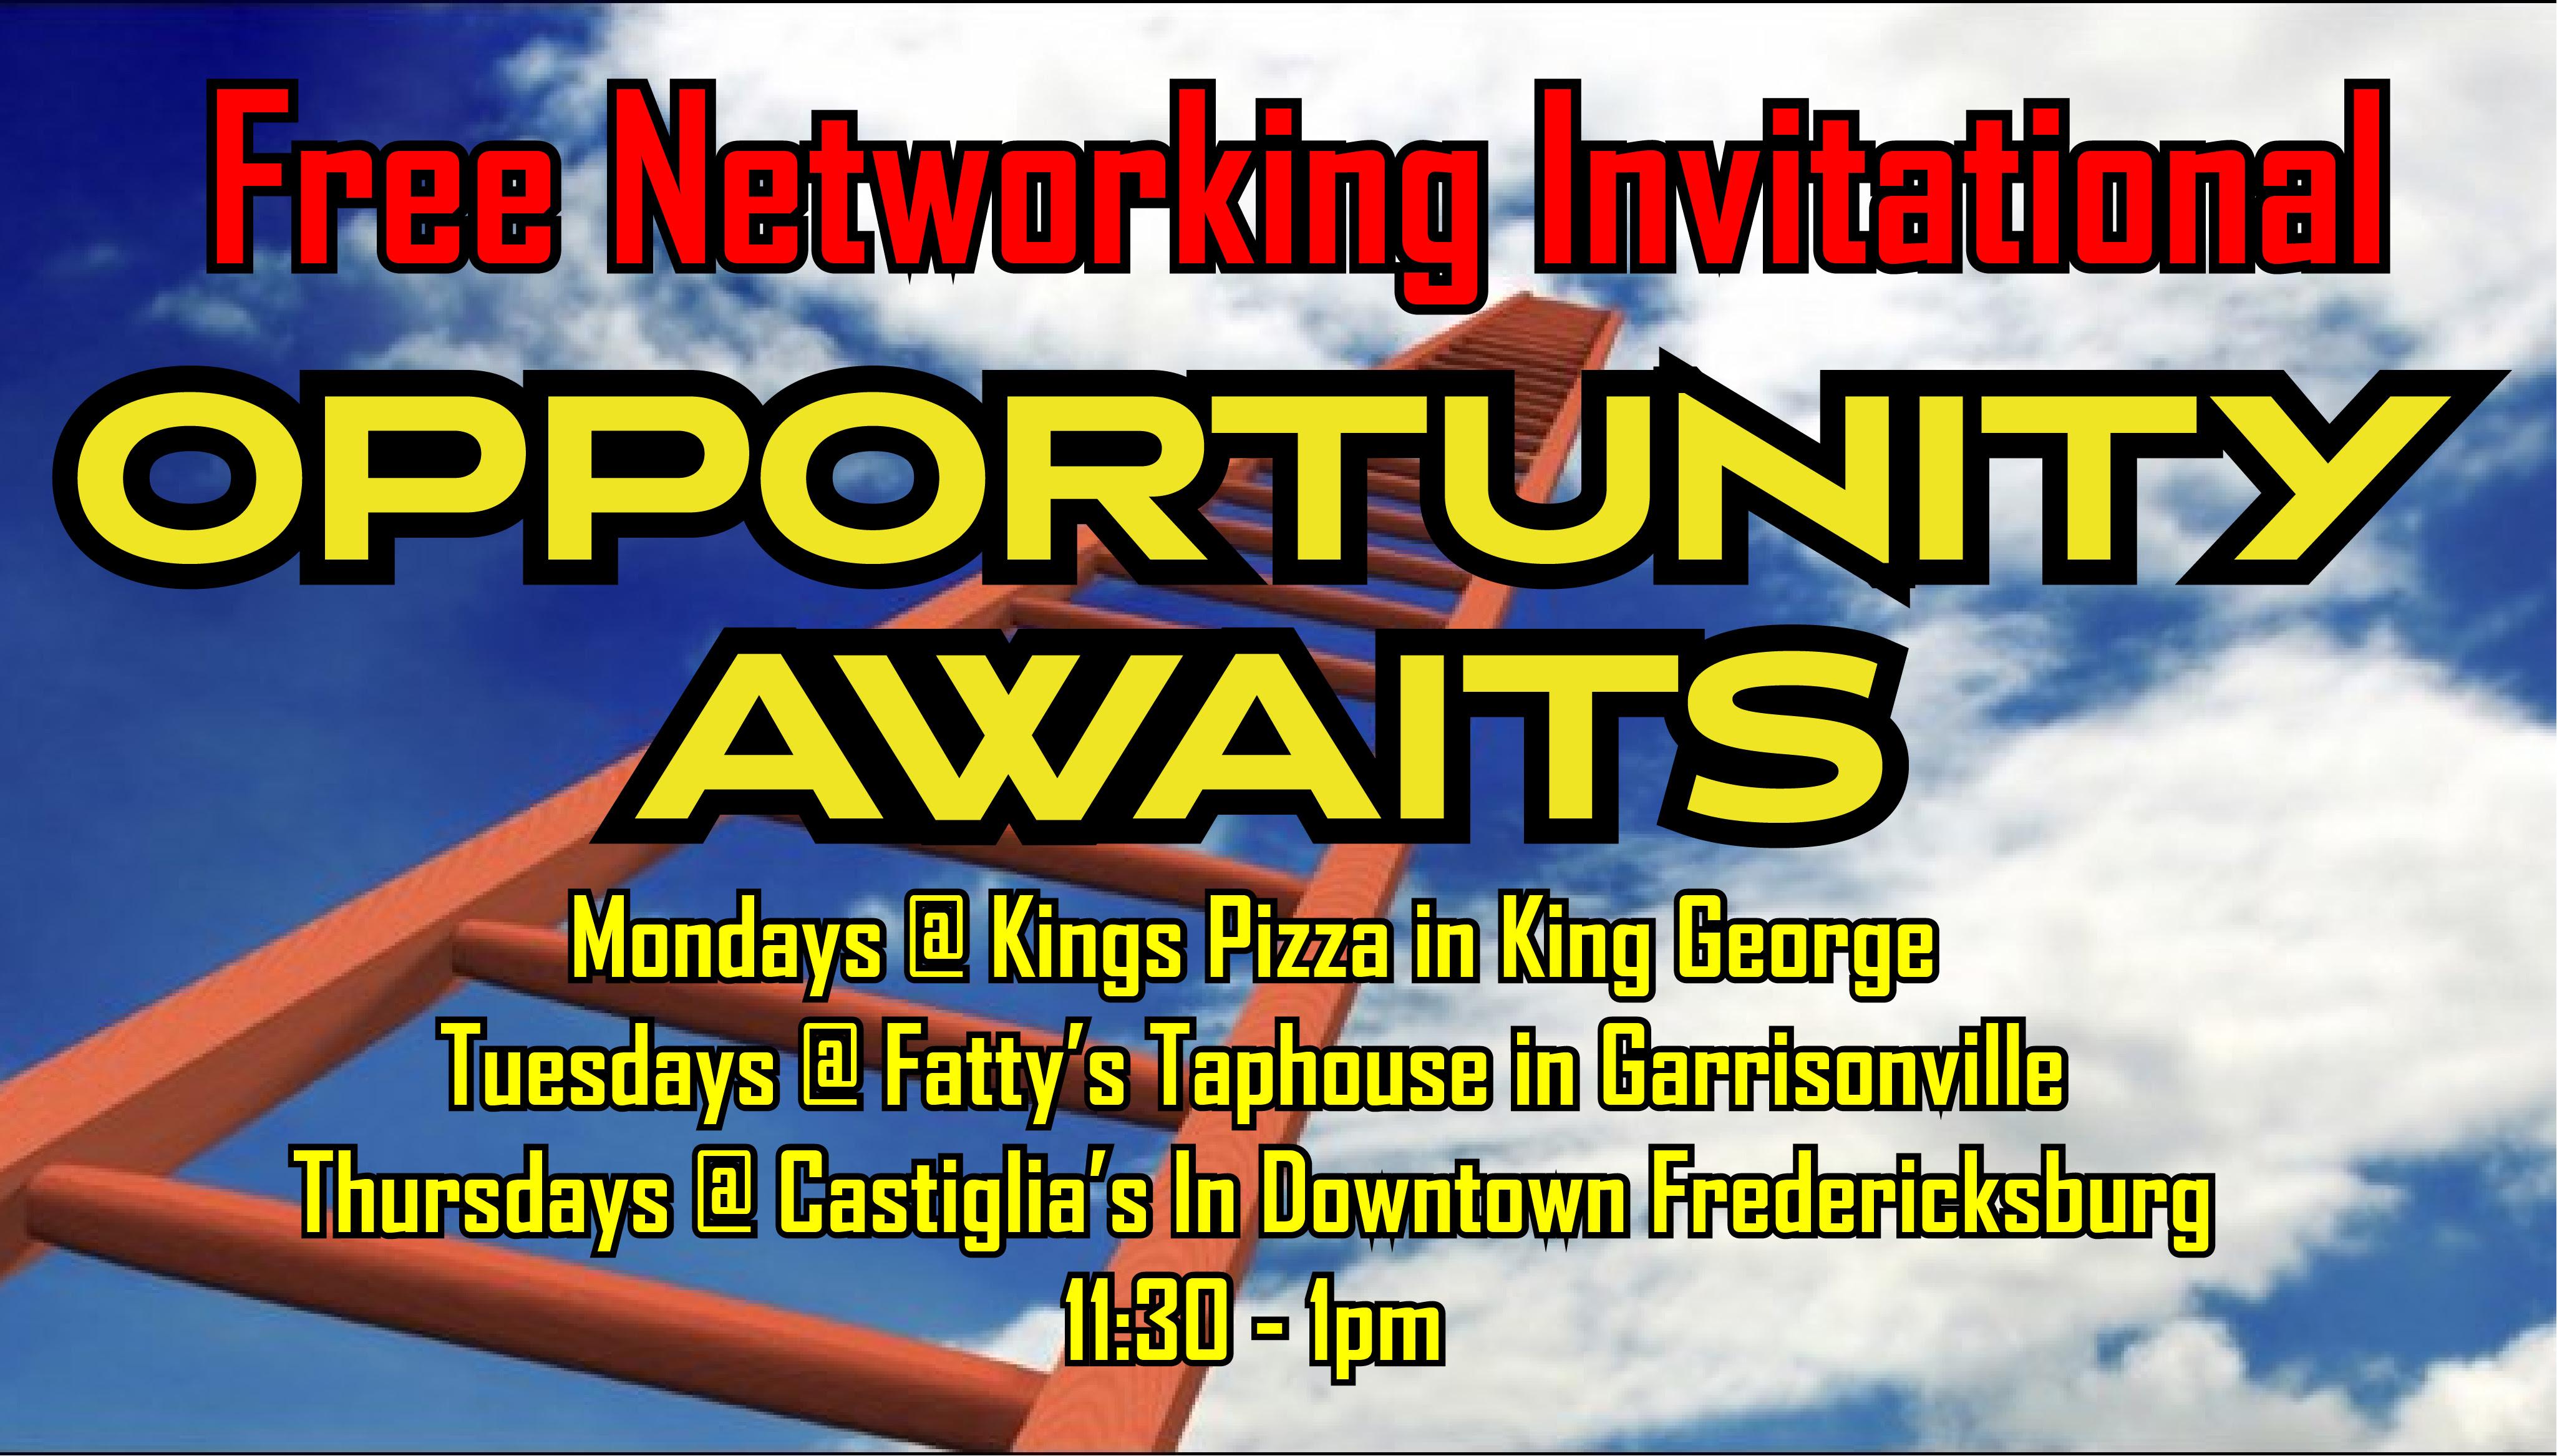 King George Free Networking Invitational